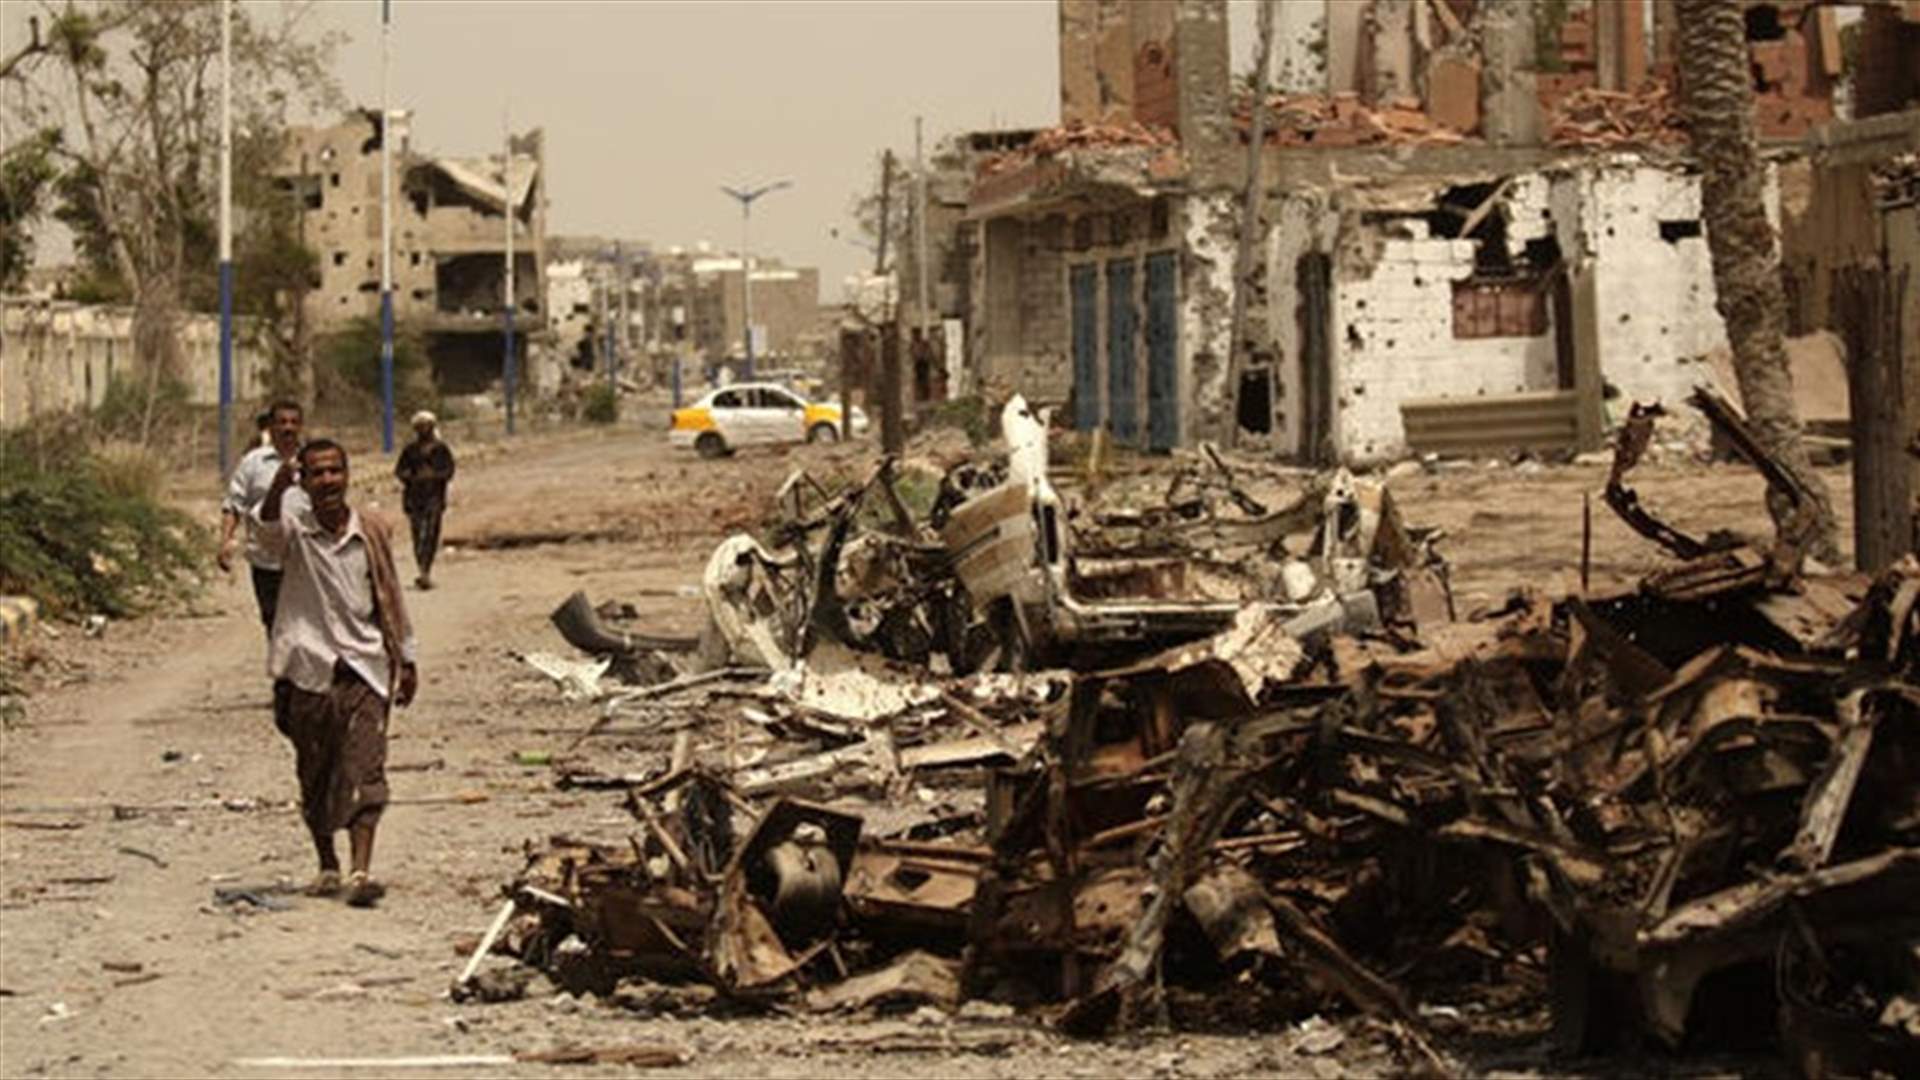 Yemeni army kicks out al Qaeda from eastern Yemeni city- residents